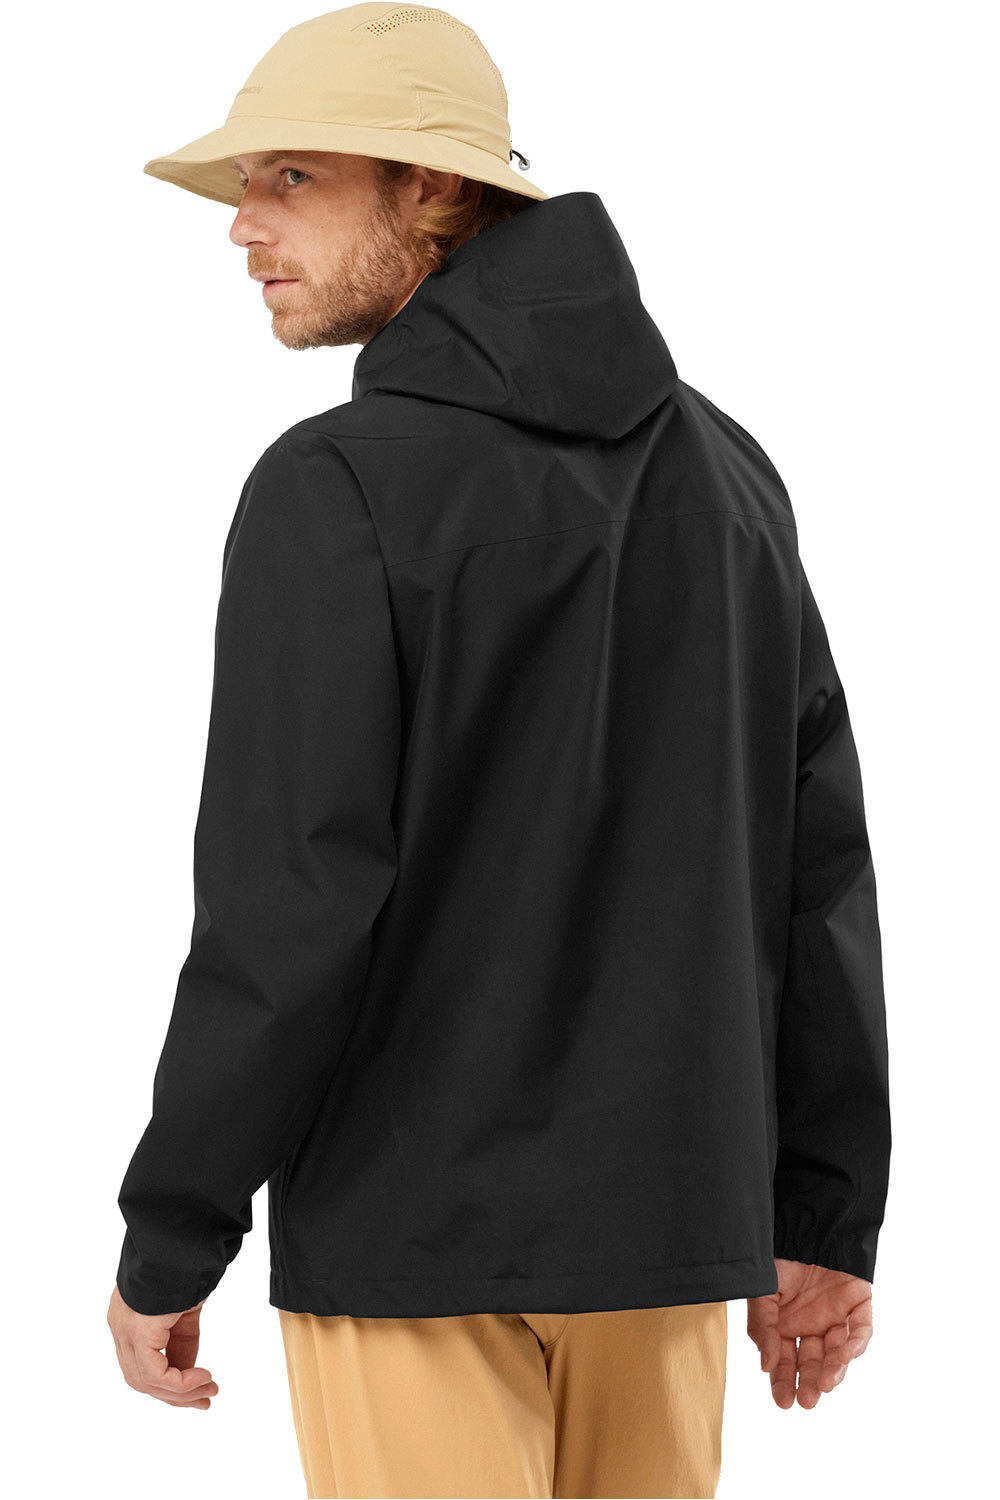 Salomon chaqueta impermeable hombre OUTLINE GORE-TEX  2.5 LAYERS vista trasera